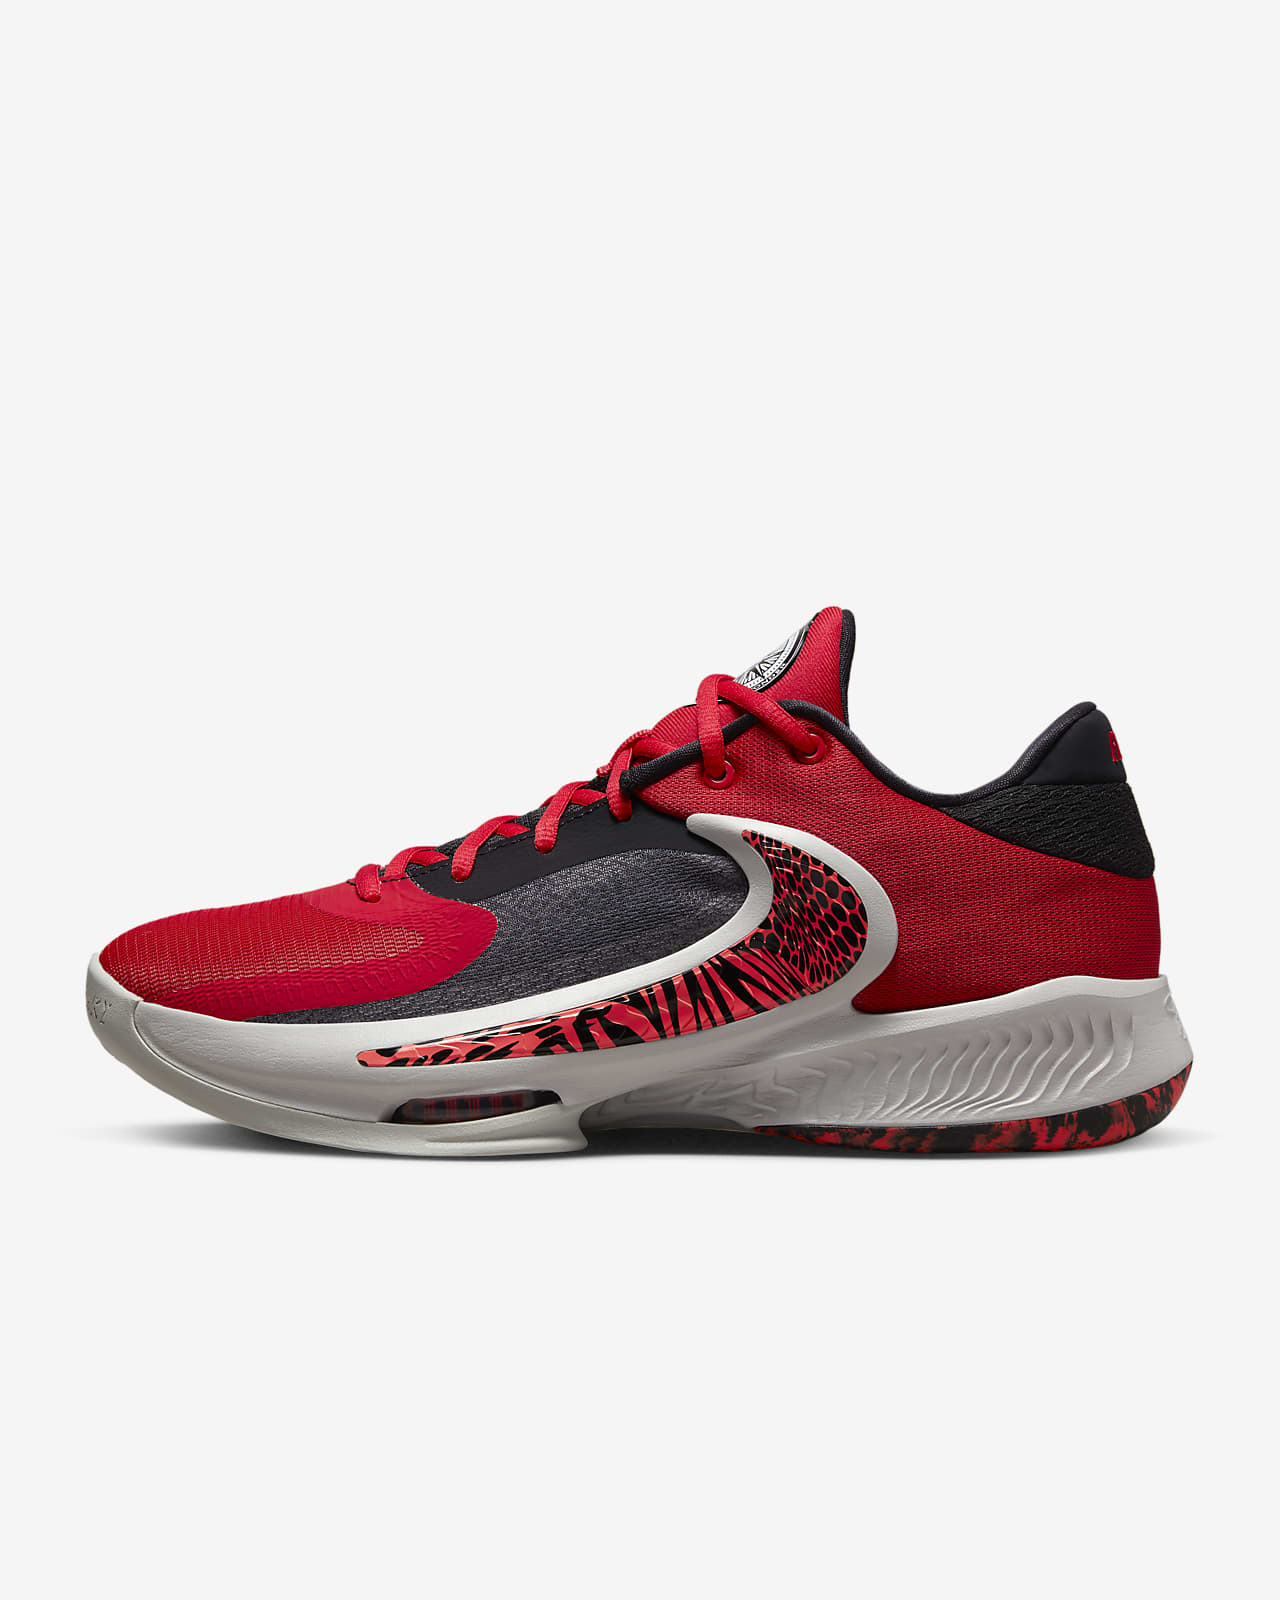 Zoom Freak 4 "Safari" Basketball Shoes